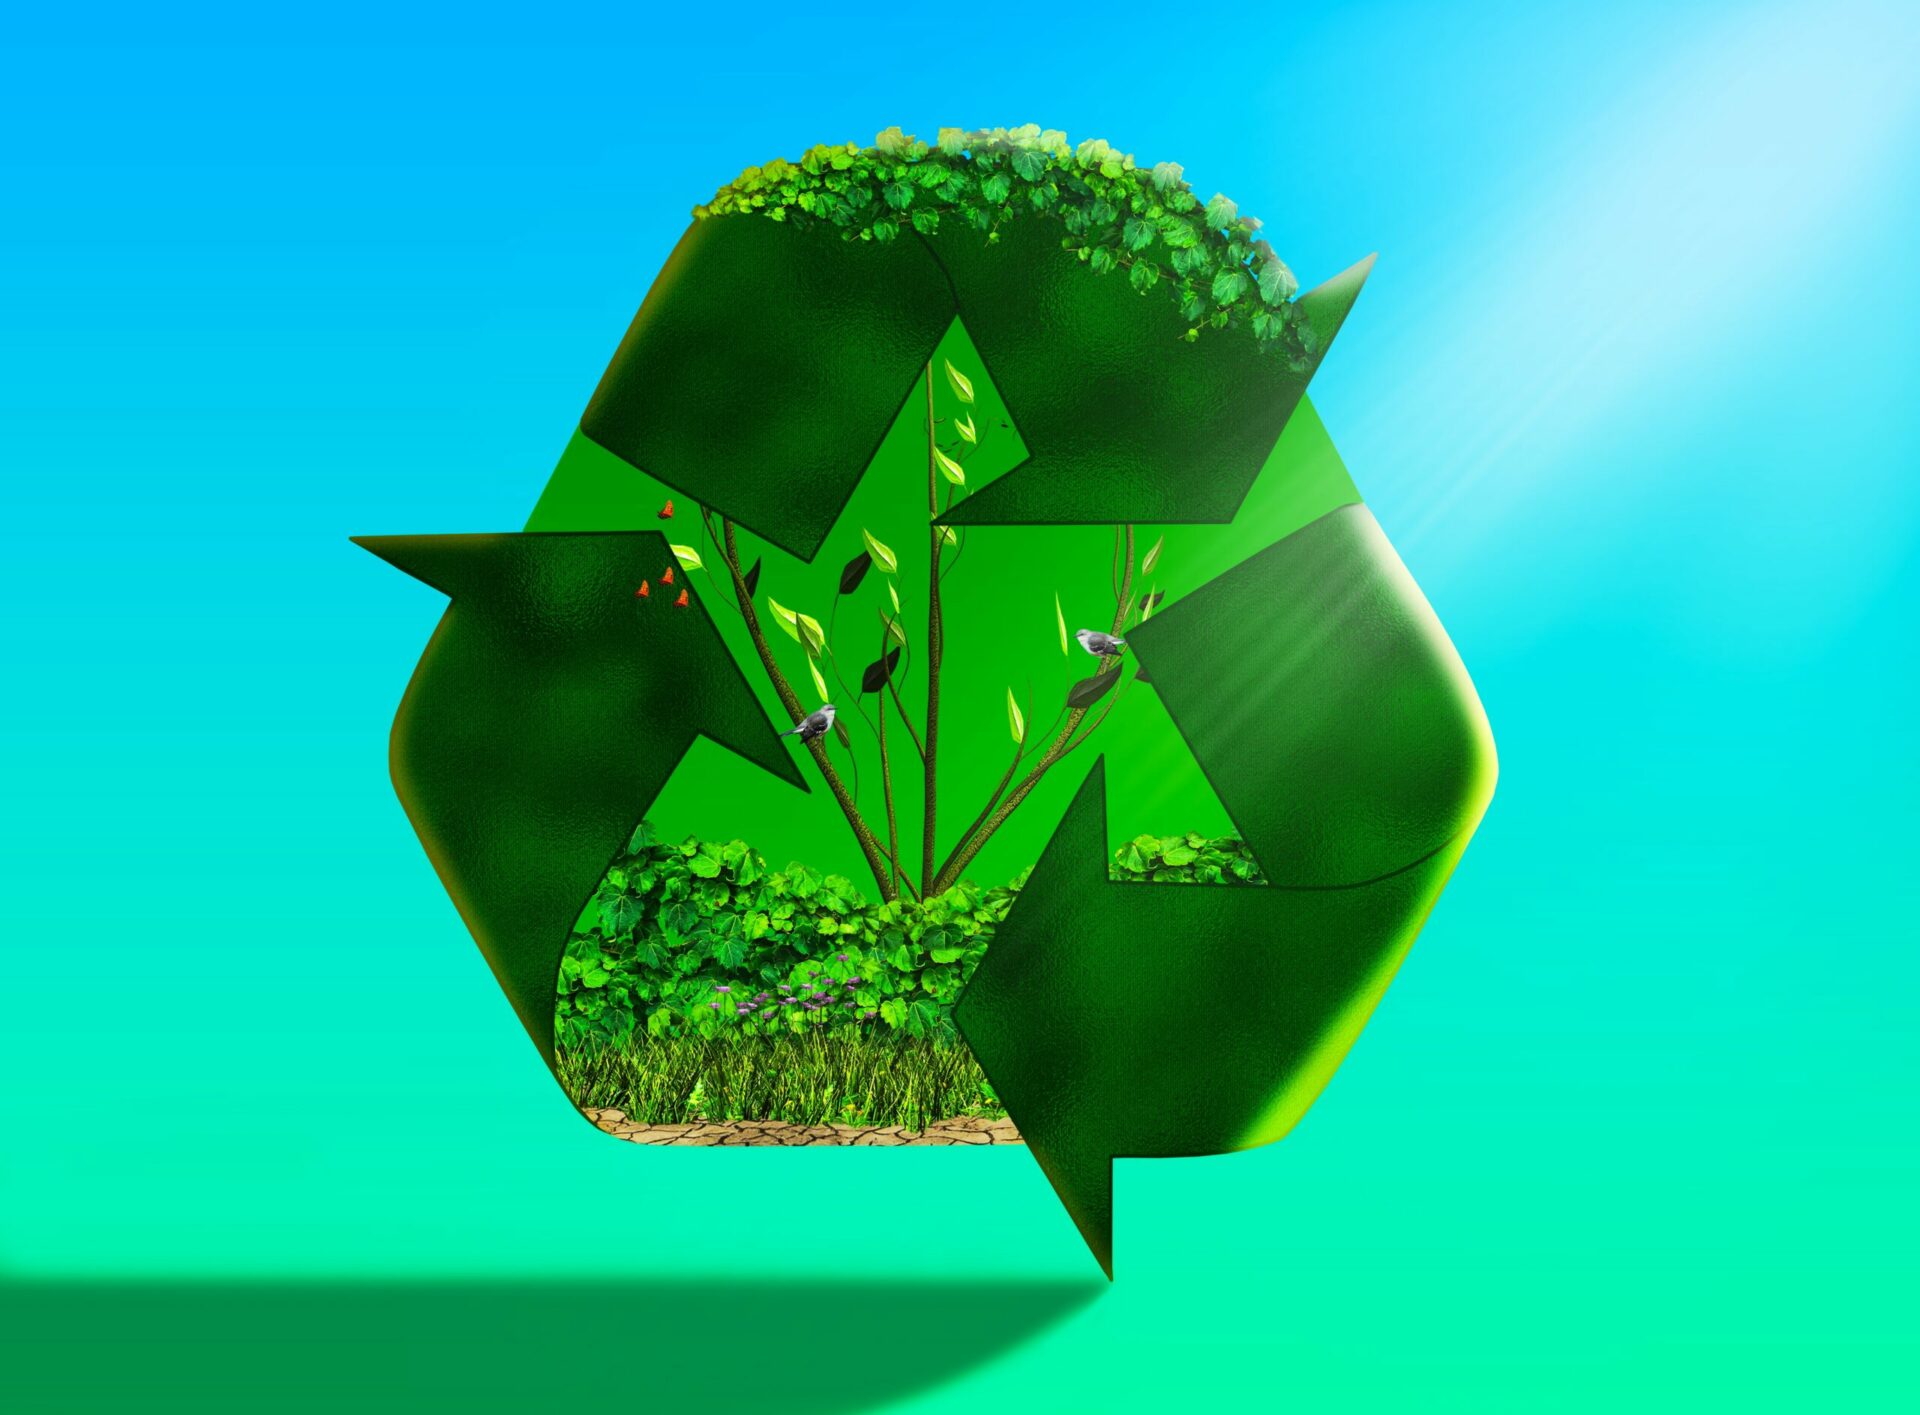 Programa "Reutilizar-reciclar-reducir"